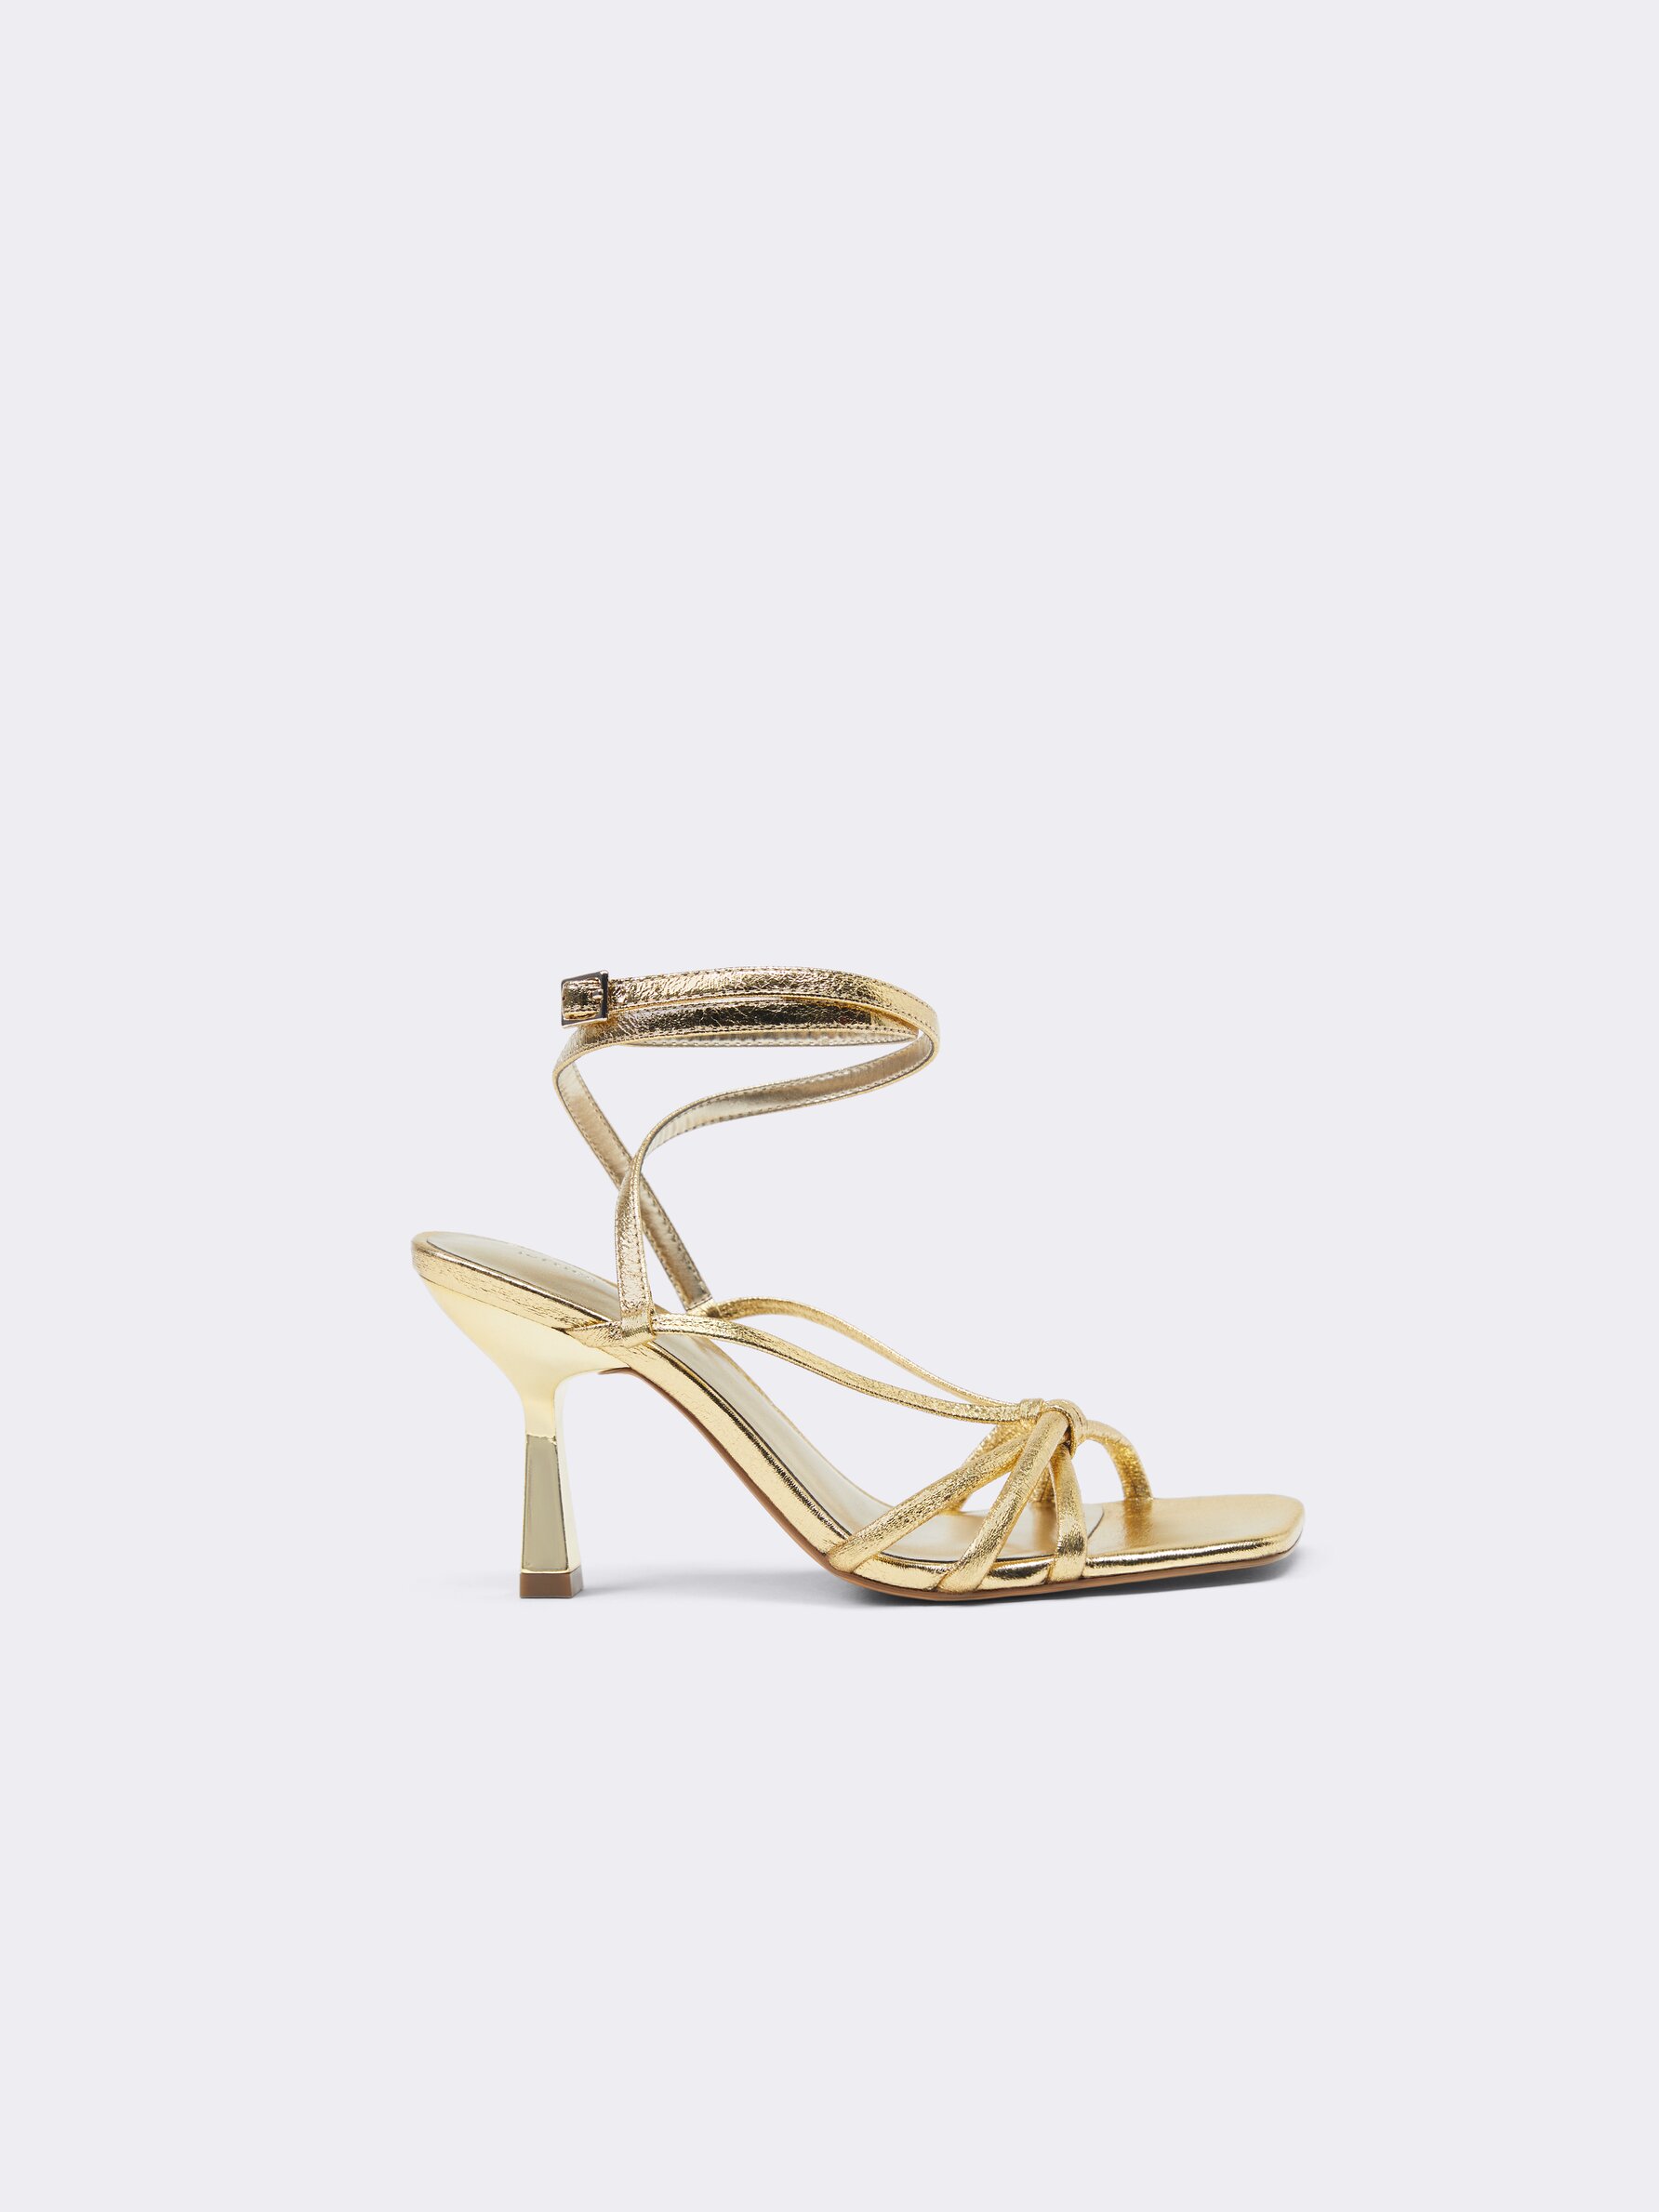 ASOS DESIGN Nandi strappy pointed high heel sandals in lilac metallic | ASOS